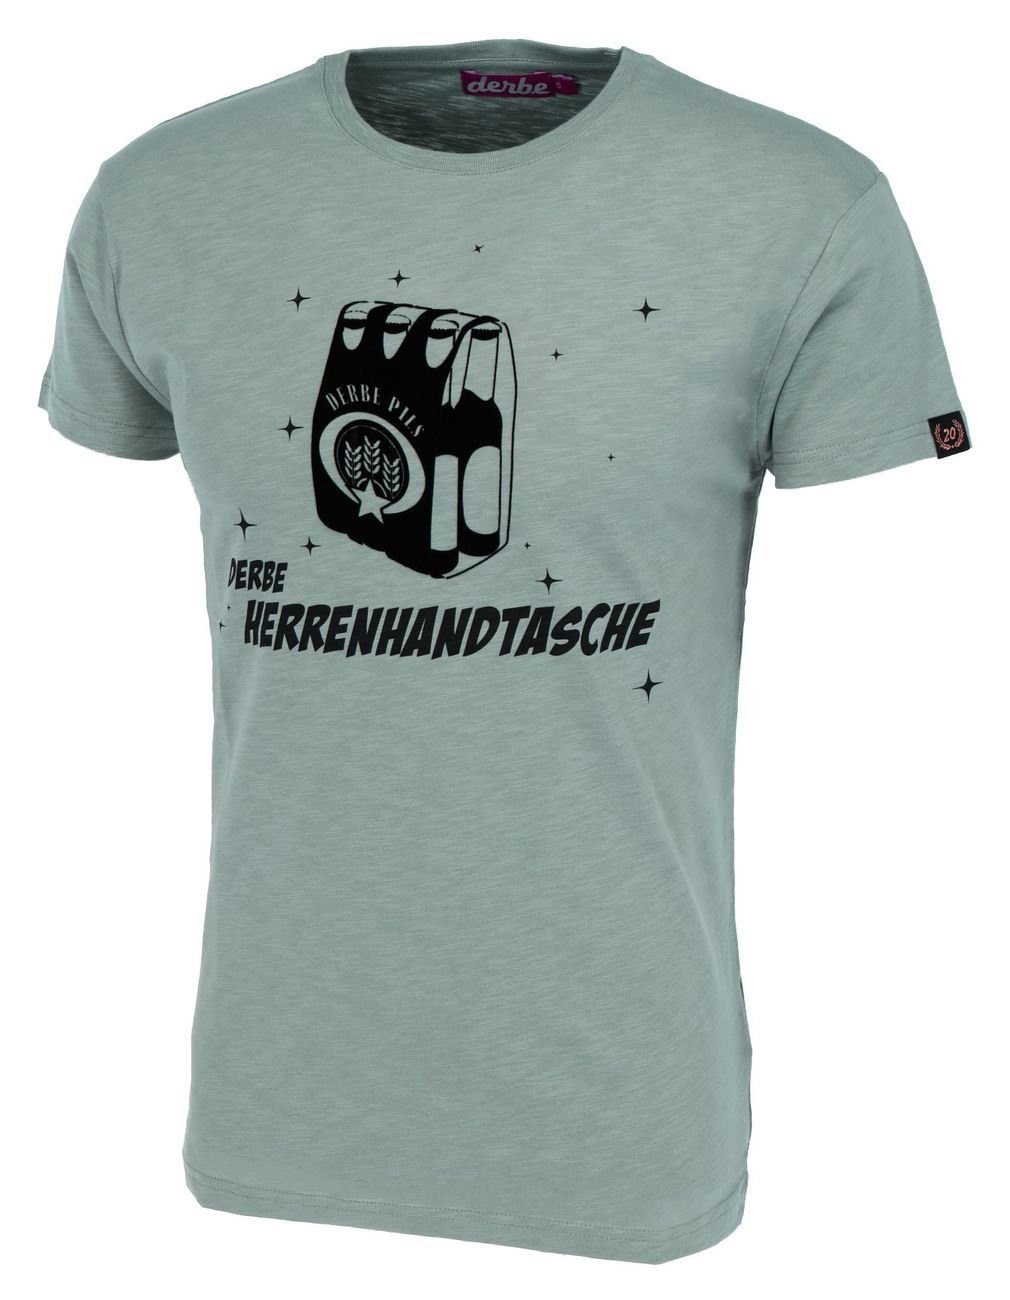 Quarry Herrenhandtasche Derbe Print-Shirt